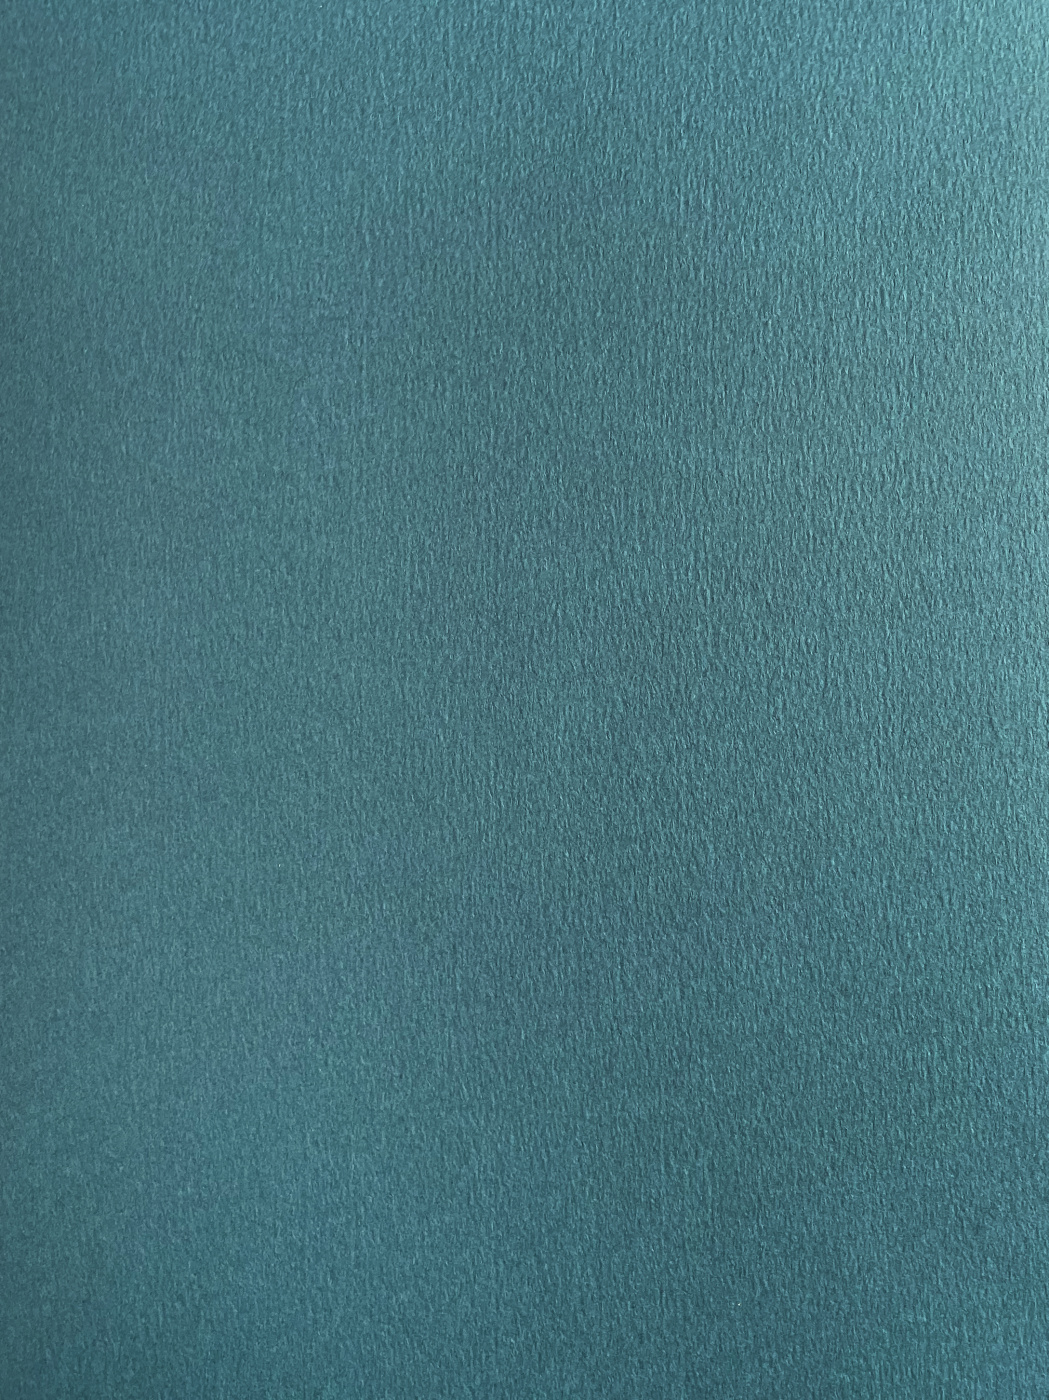 Бумага для пастели Малевичъ GrafArt А4 270 г, морская волна бумага для скрапбукинга двусторонняя винтаж